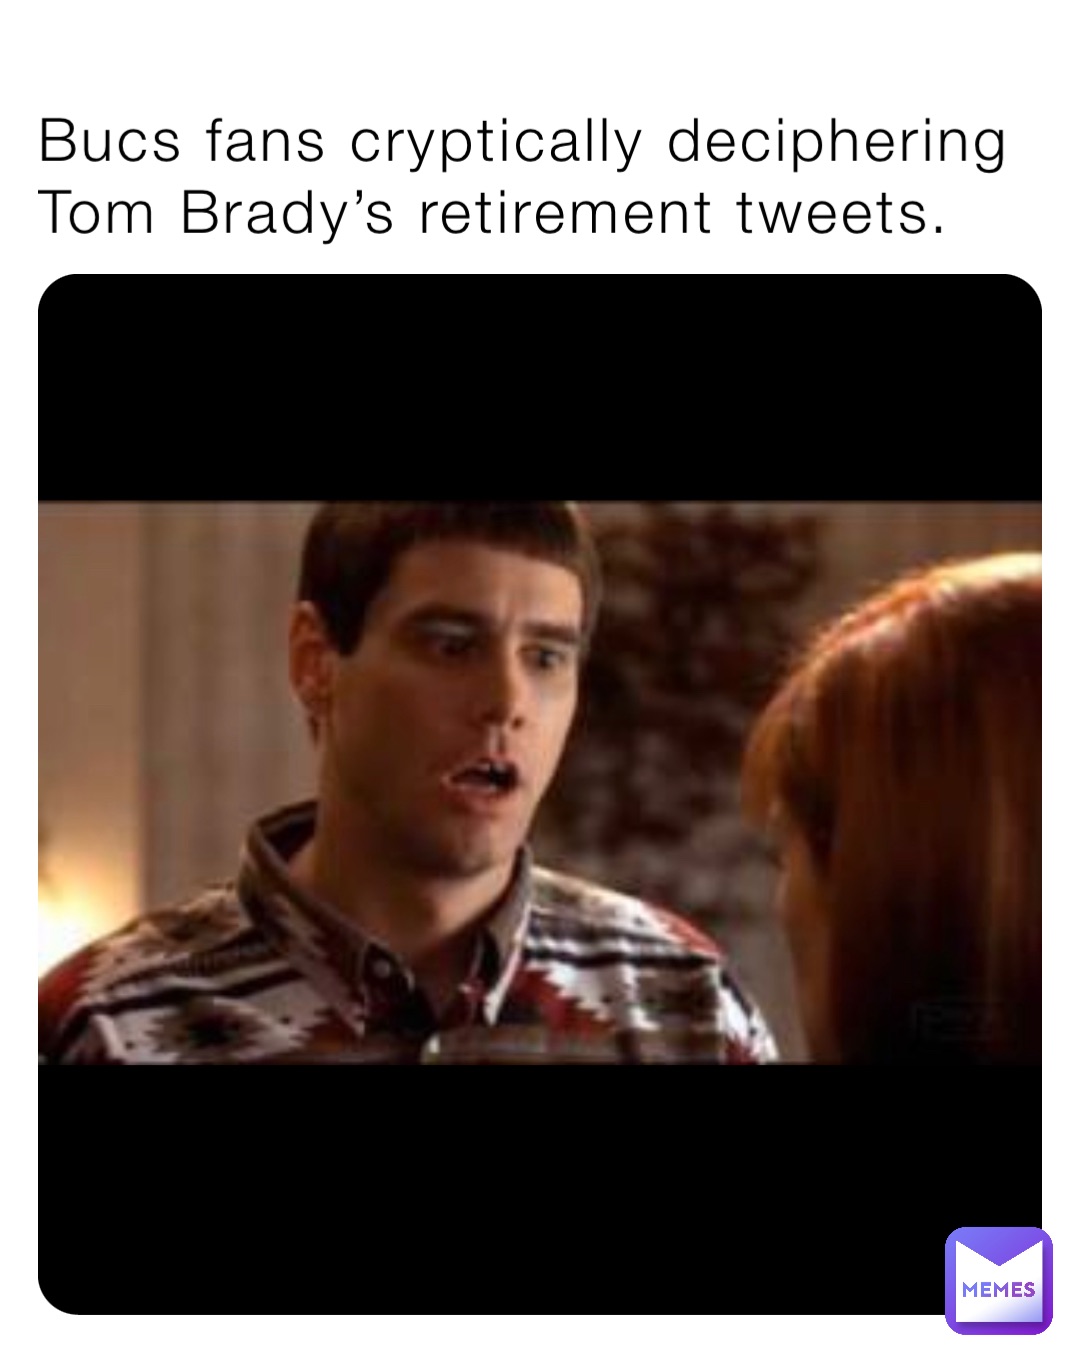 Bucs fans cryptically deciphering Tom Brady’s retirement tweets.